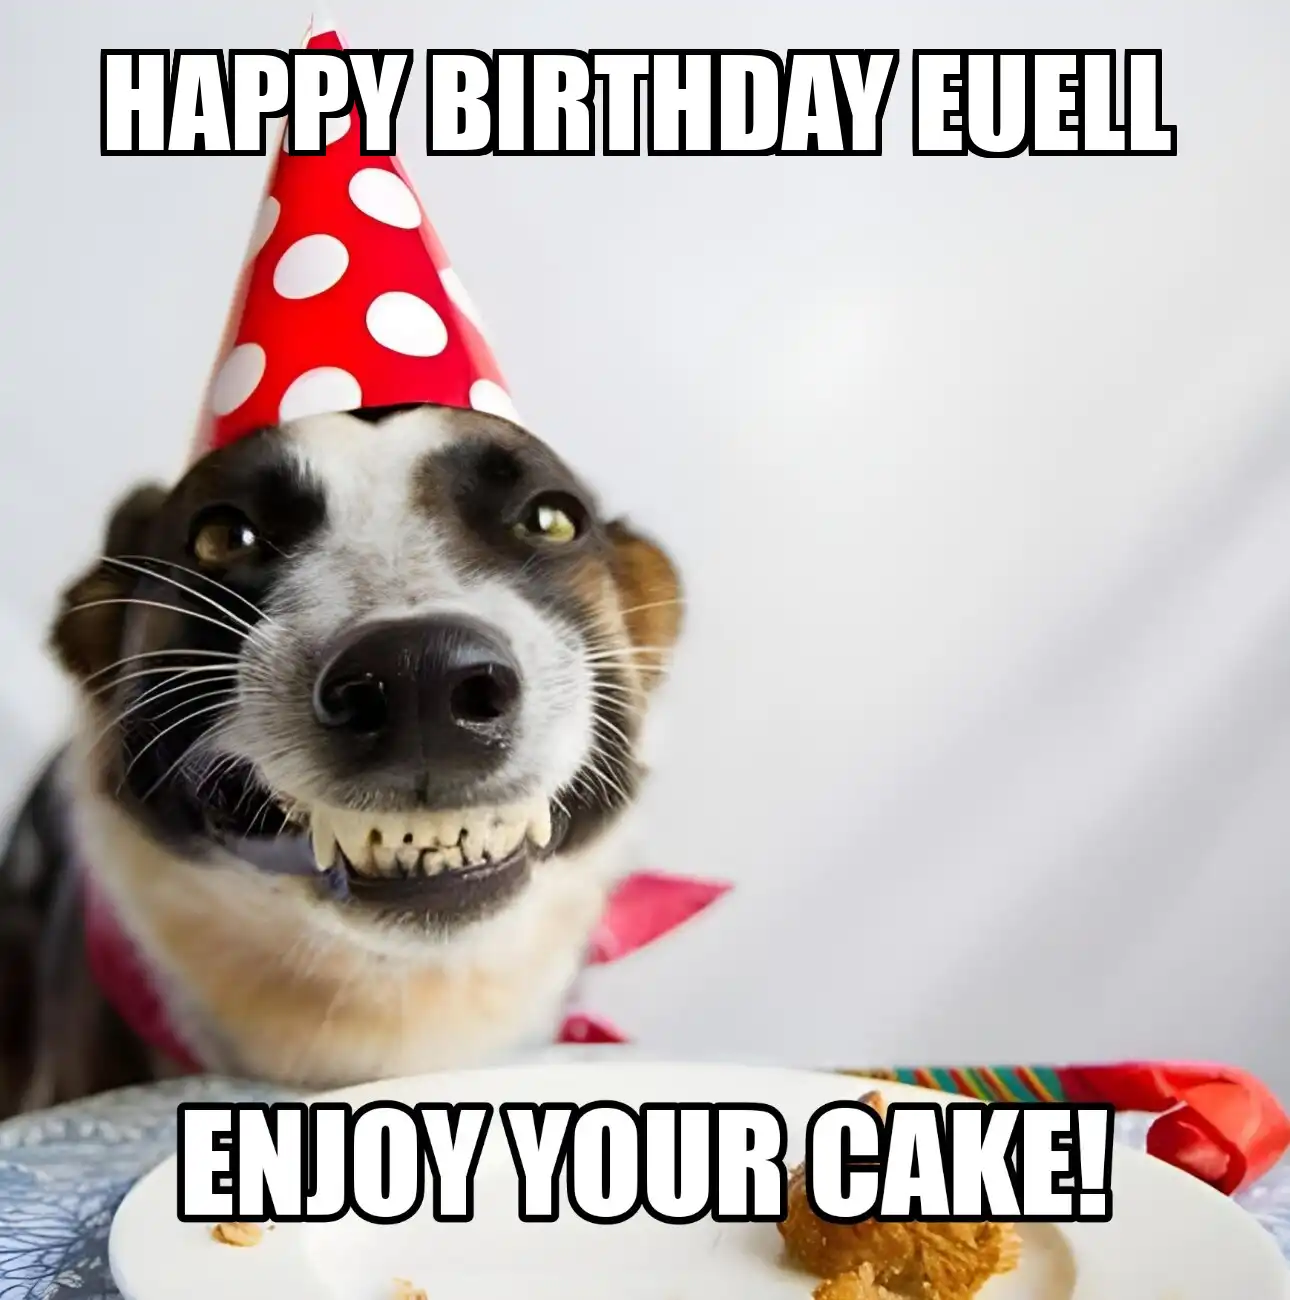 Happy Birthday Euell Enjoy Your Cake Dog Meme